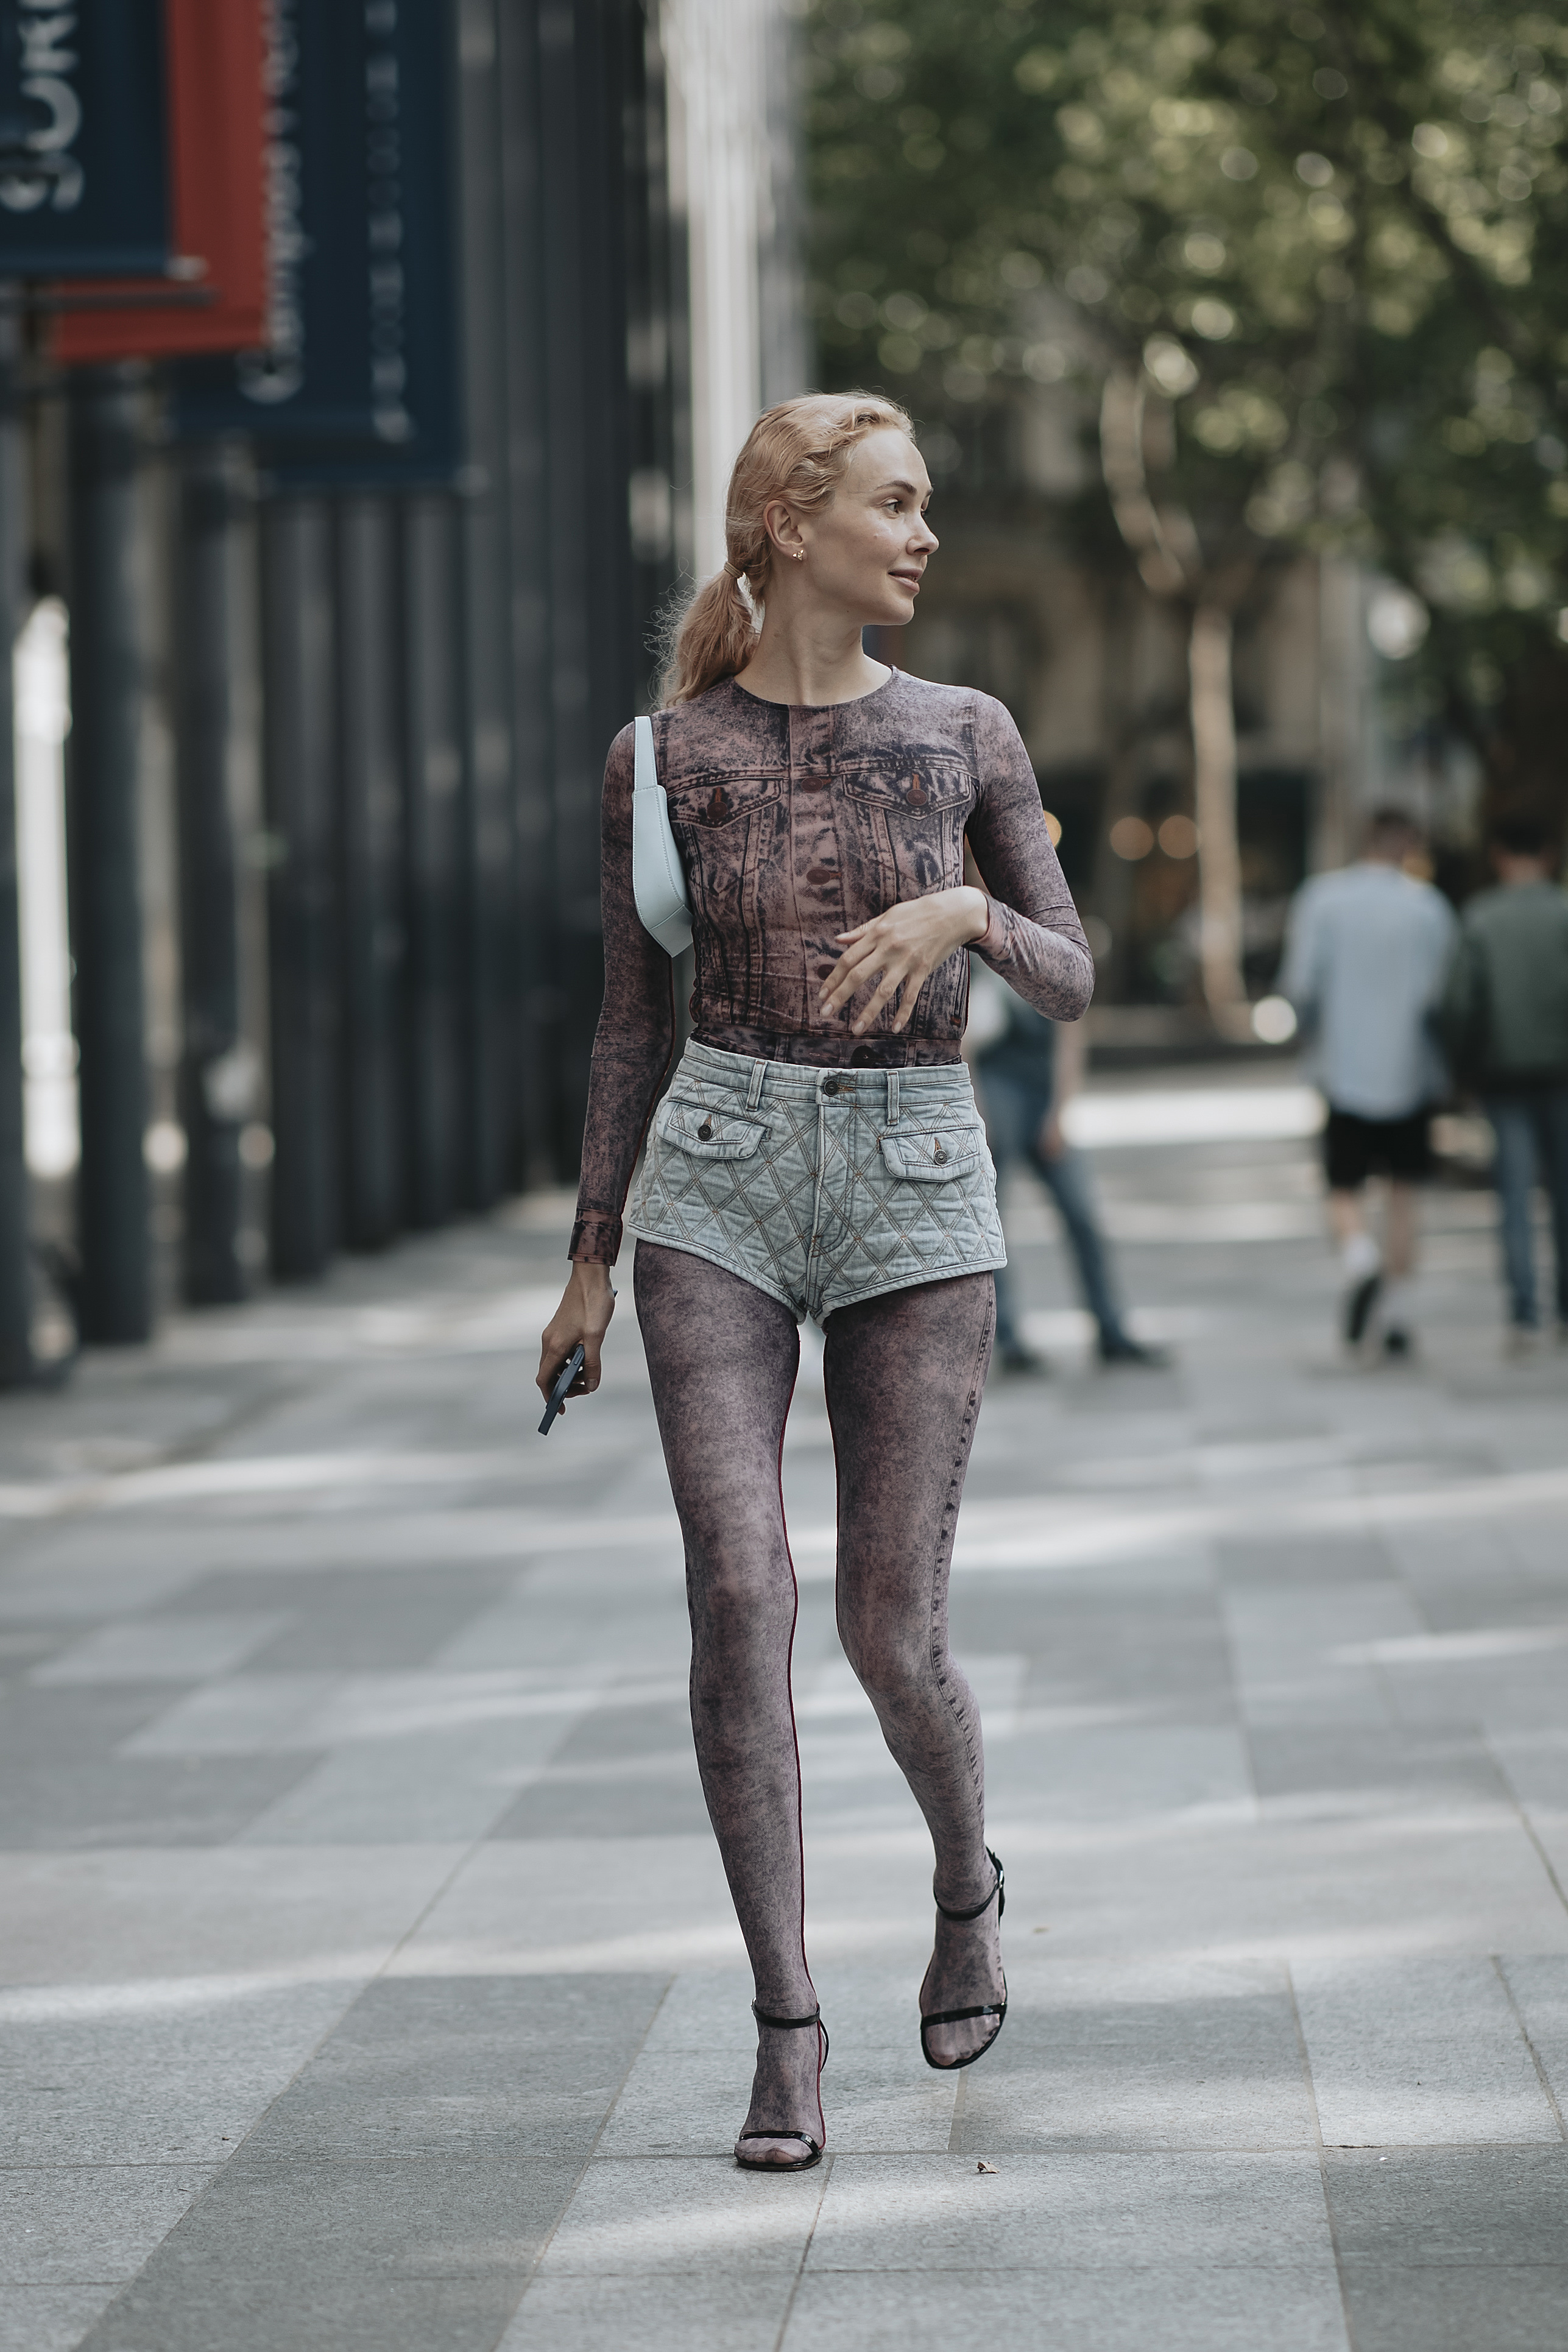 Stylish Women's Denim Shorts for a Unique Look